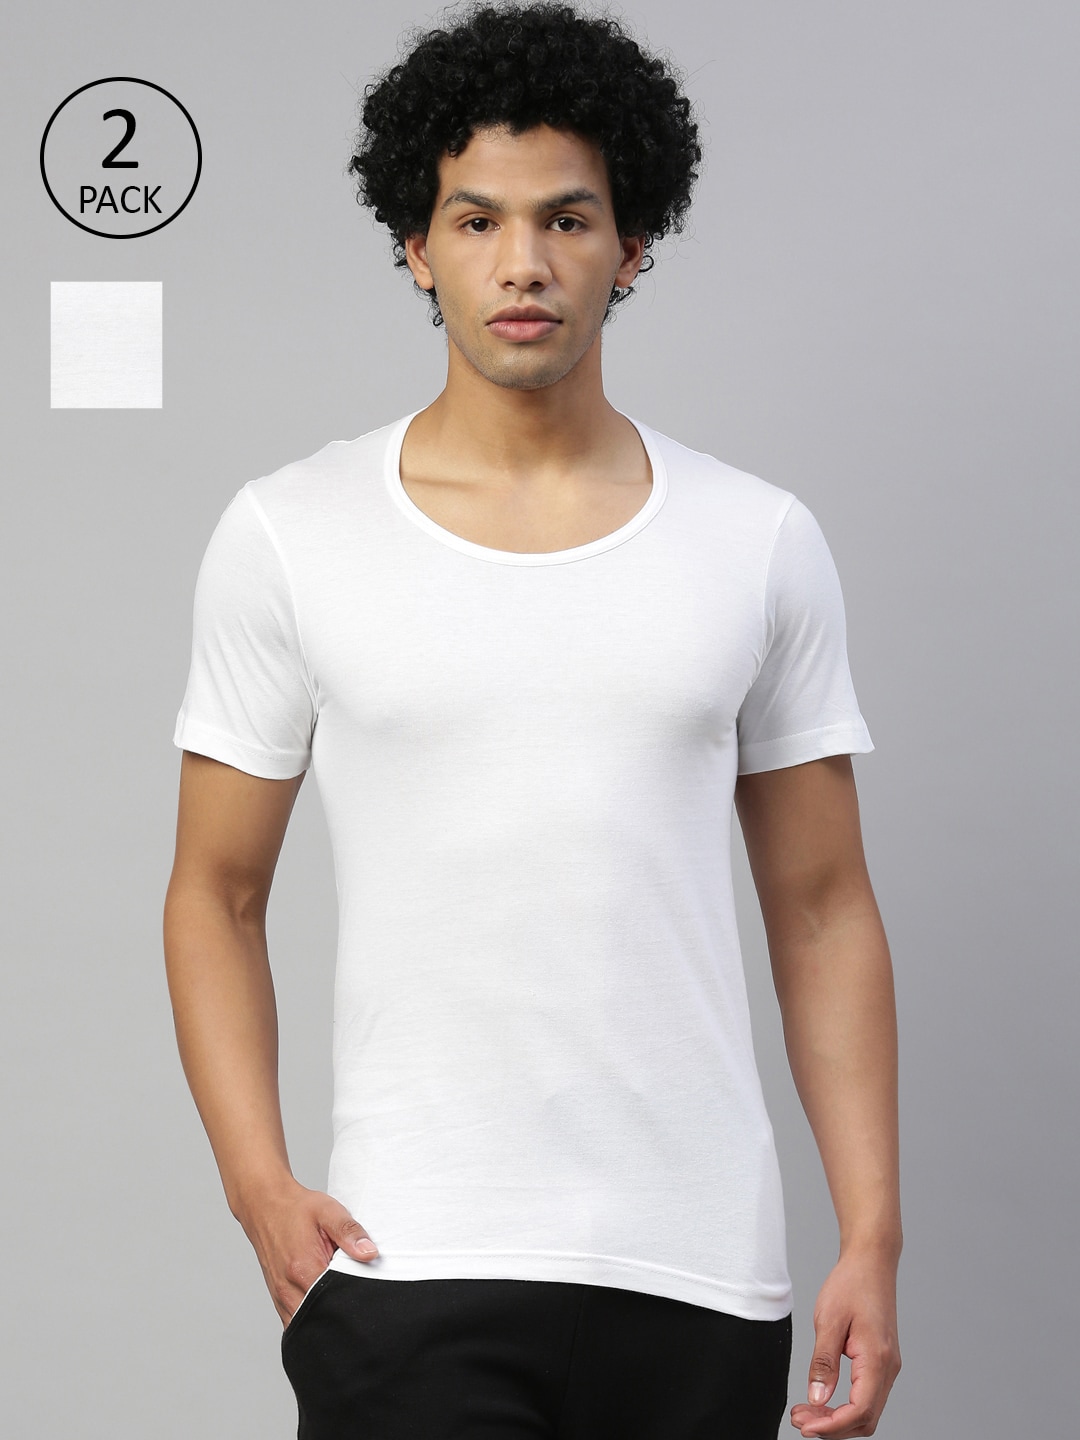 Clothing Innerwear Vests | DIXCY SCOTT MAXIMUS Men Pack Of 2 White Solid Pure Cotton Innerwear Gym Vests MAXV-003-GLIDE VEST-P2 - OT56511